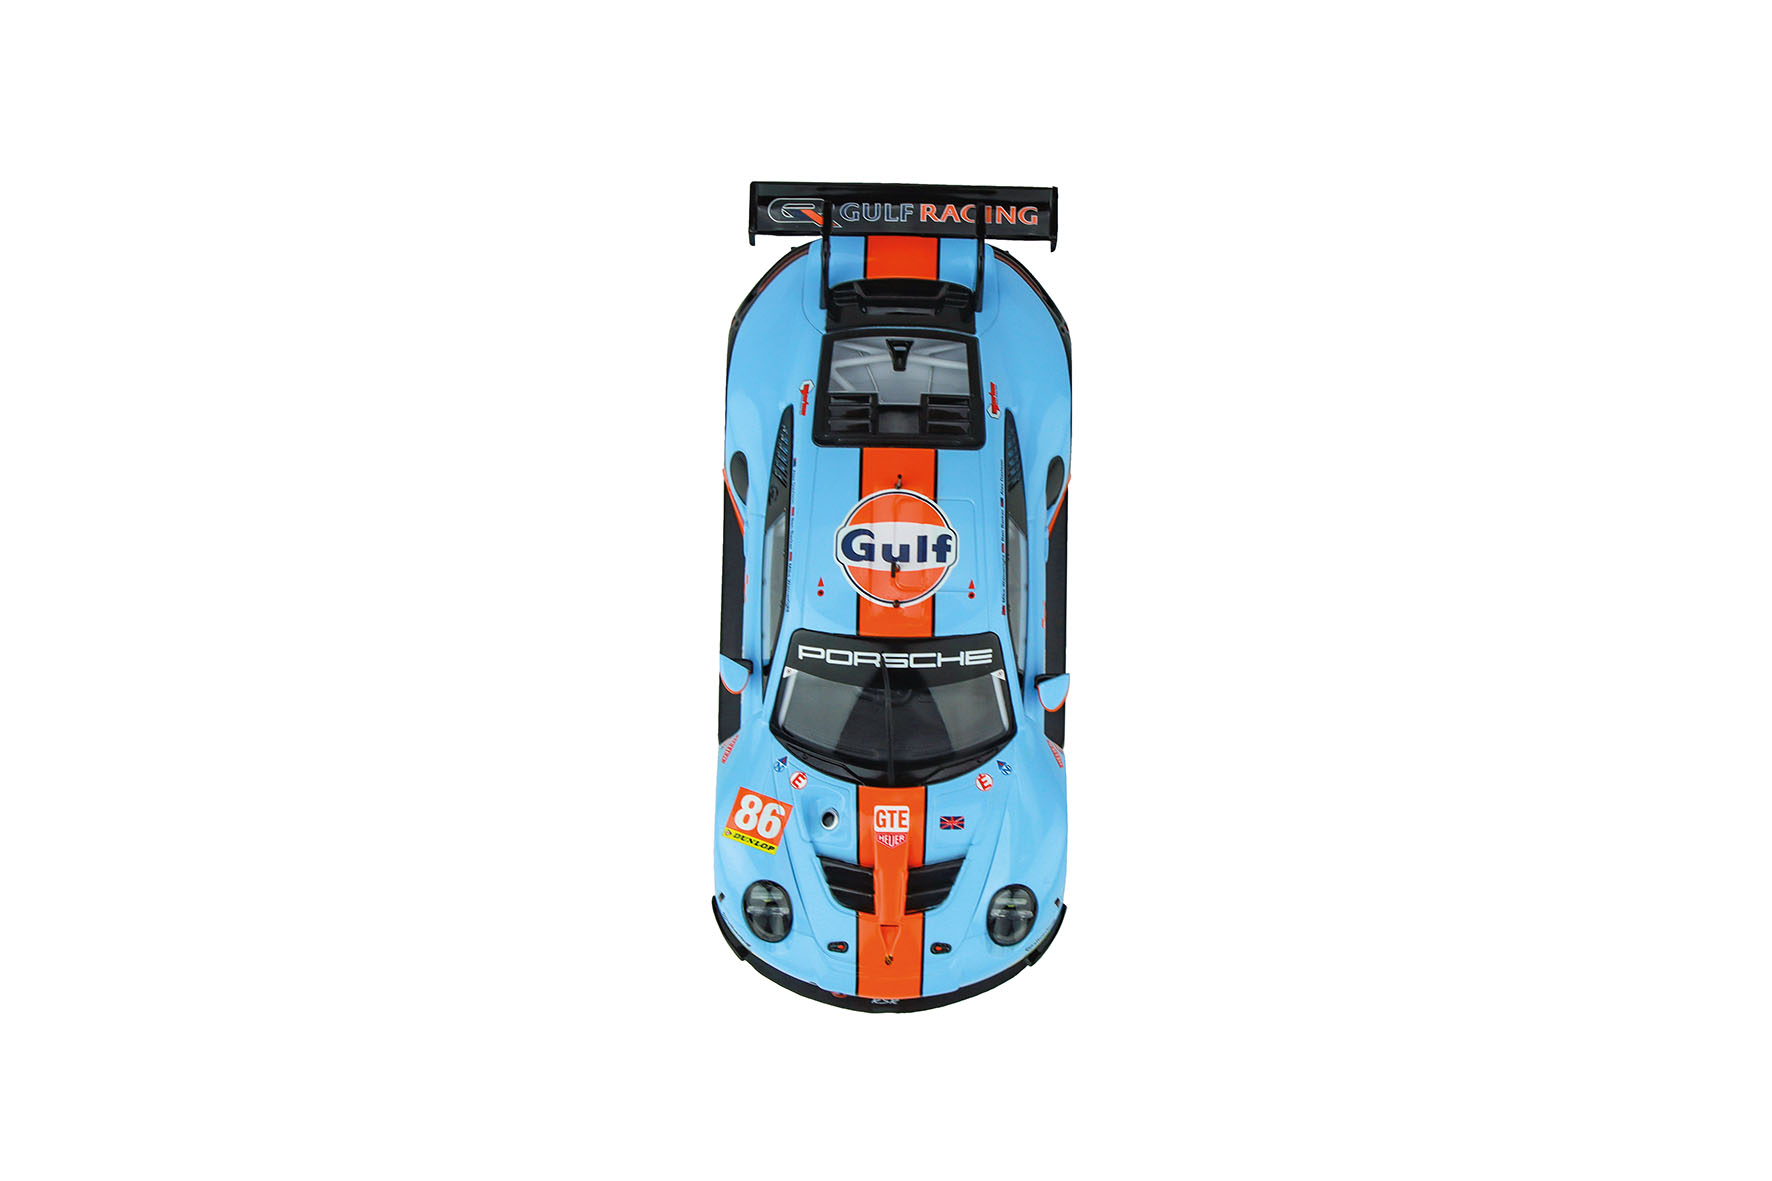 Porsche 911 RSR "Gulf Racing, - CARRERA DIGITAL 132  Porsche 911 RSR Gulf Racing, Mike Wainwright, No.86, Silverstone 2018